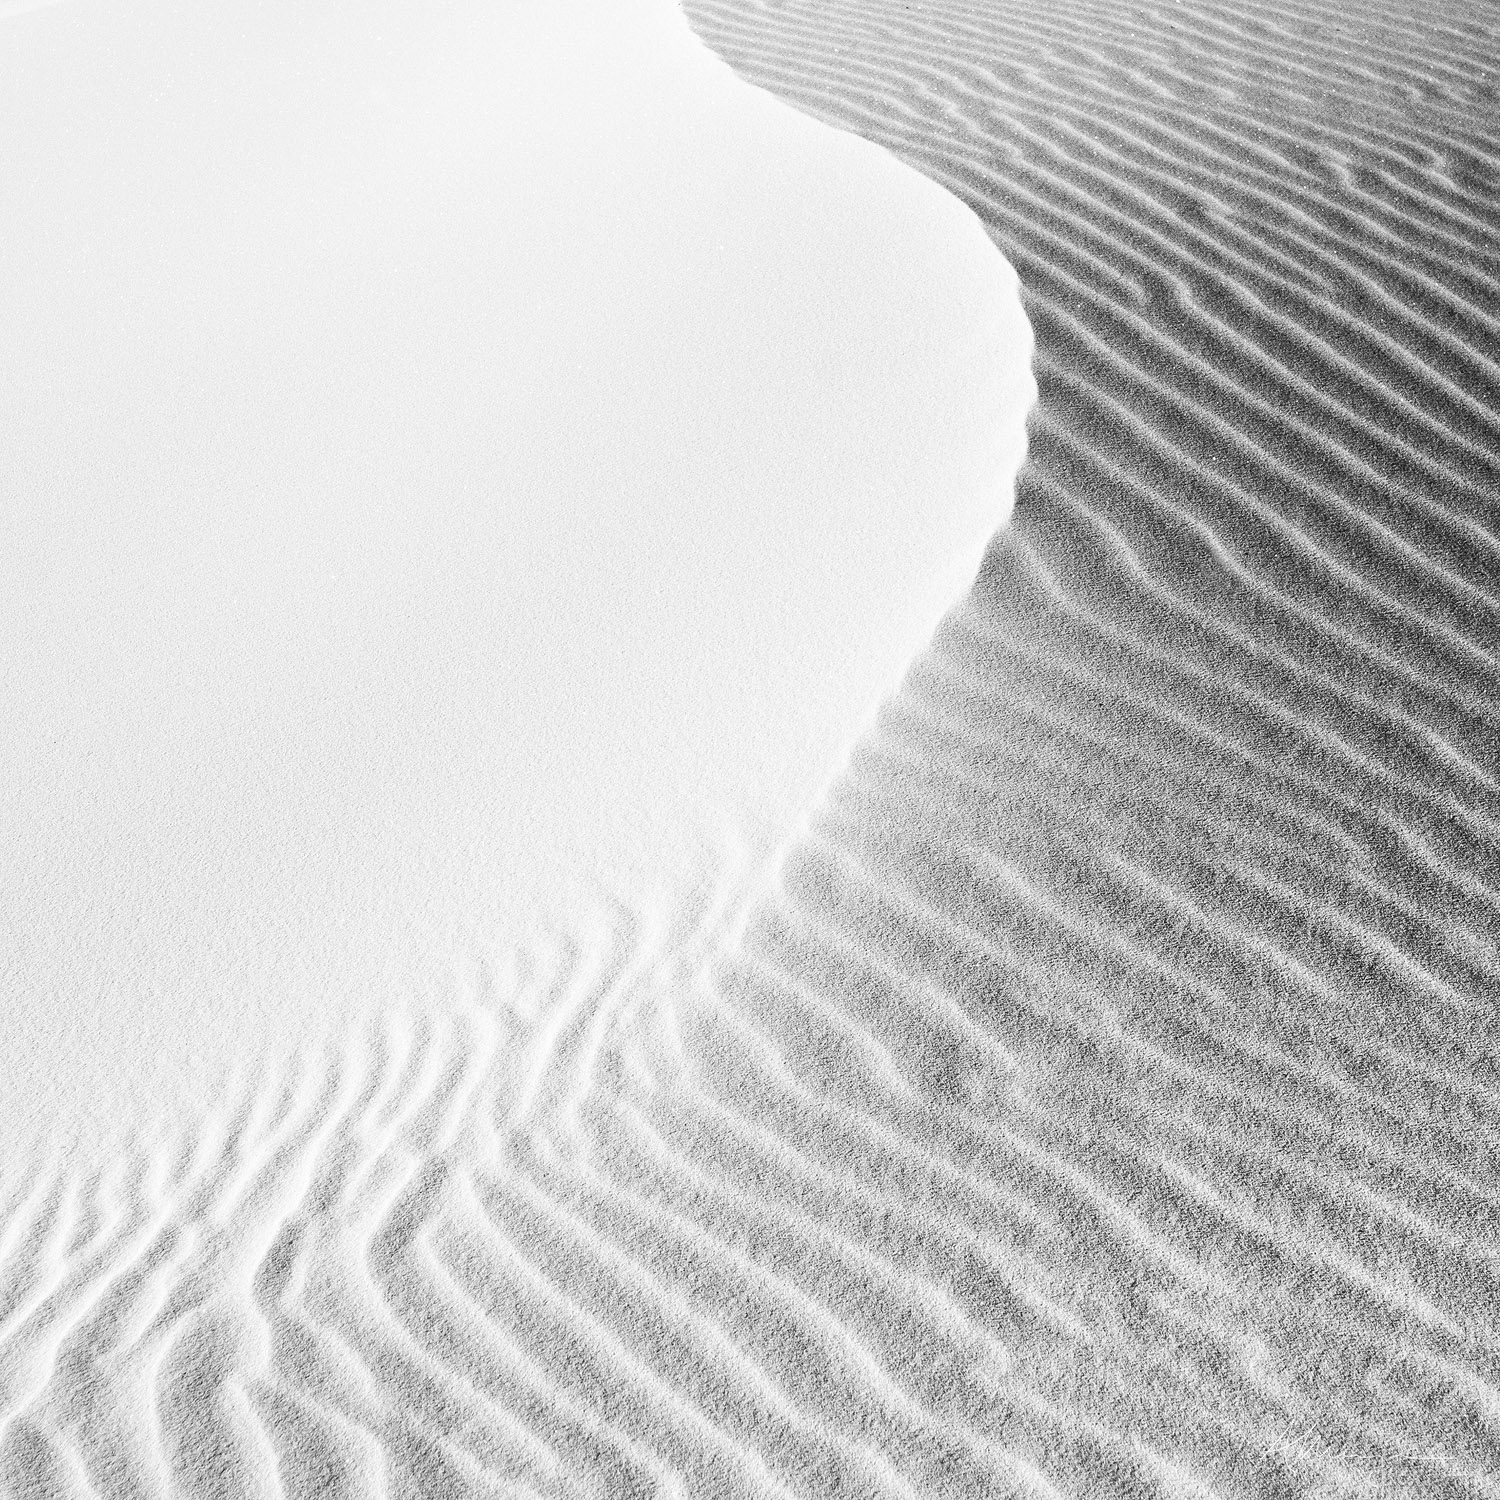 Sand patterns at White Sands National Park